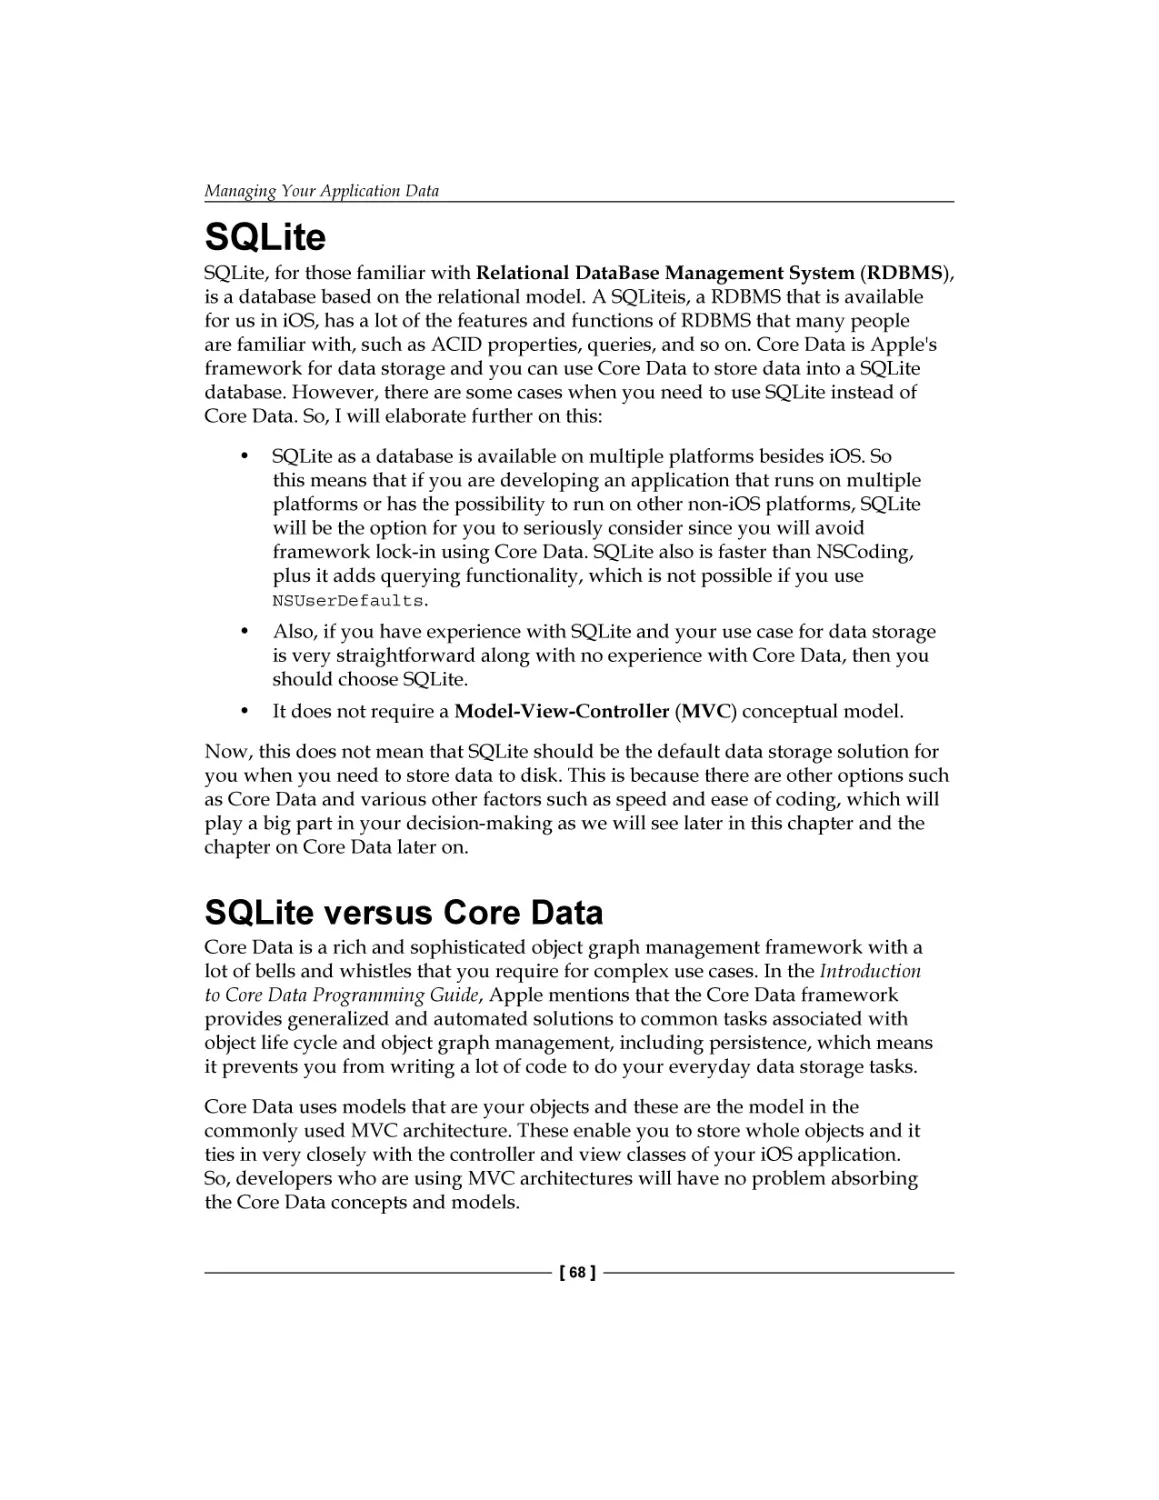 SQLite
SQLite versus Core Data